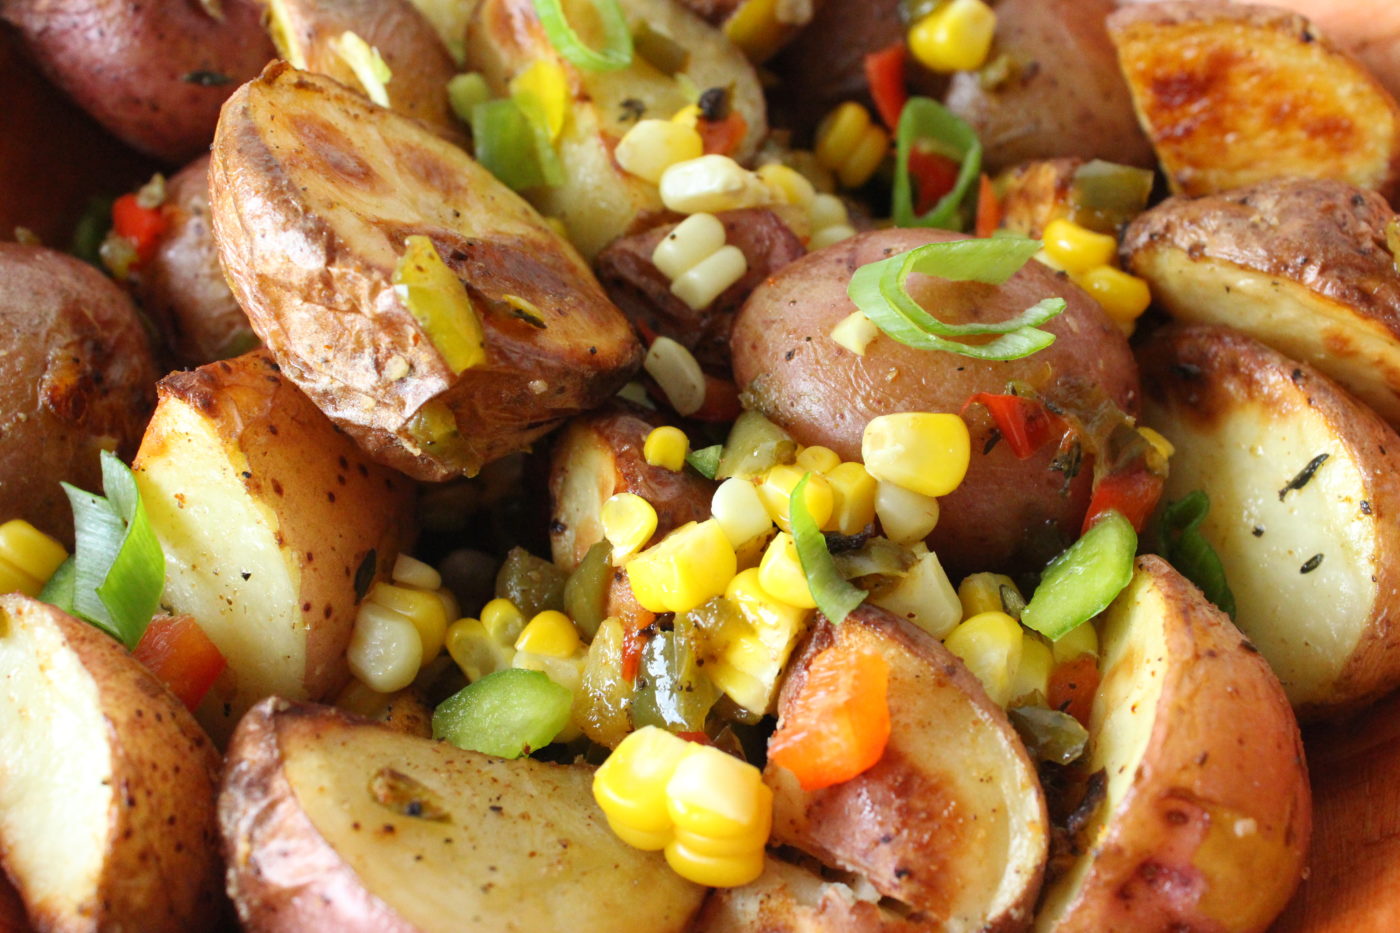 Simple oven roasted potato salad | via Eat.Drink.Frolic.